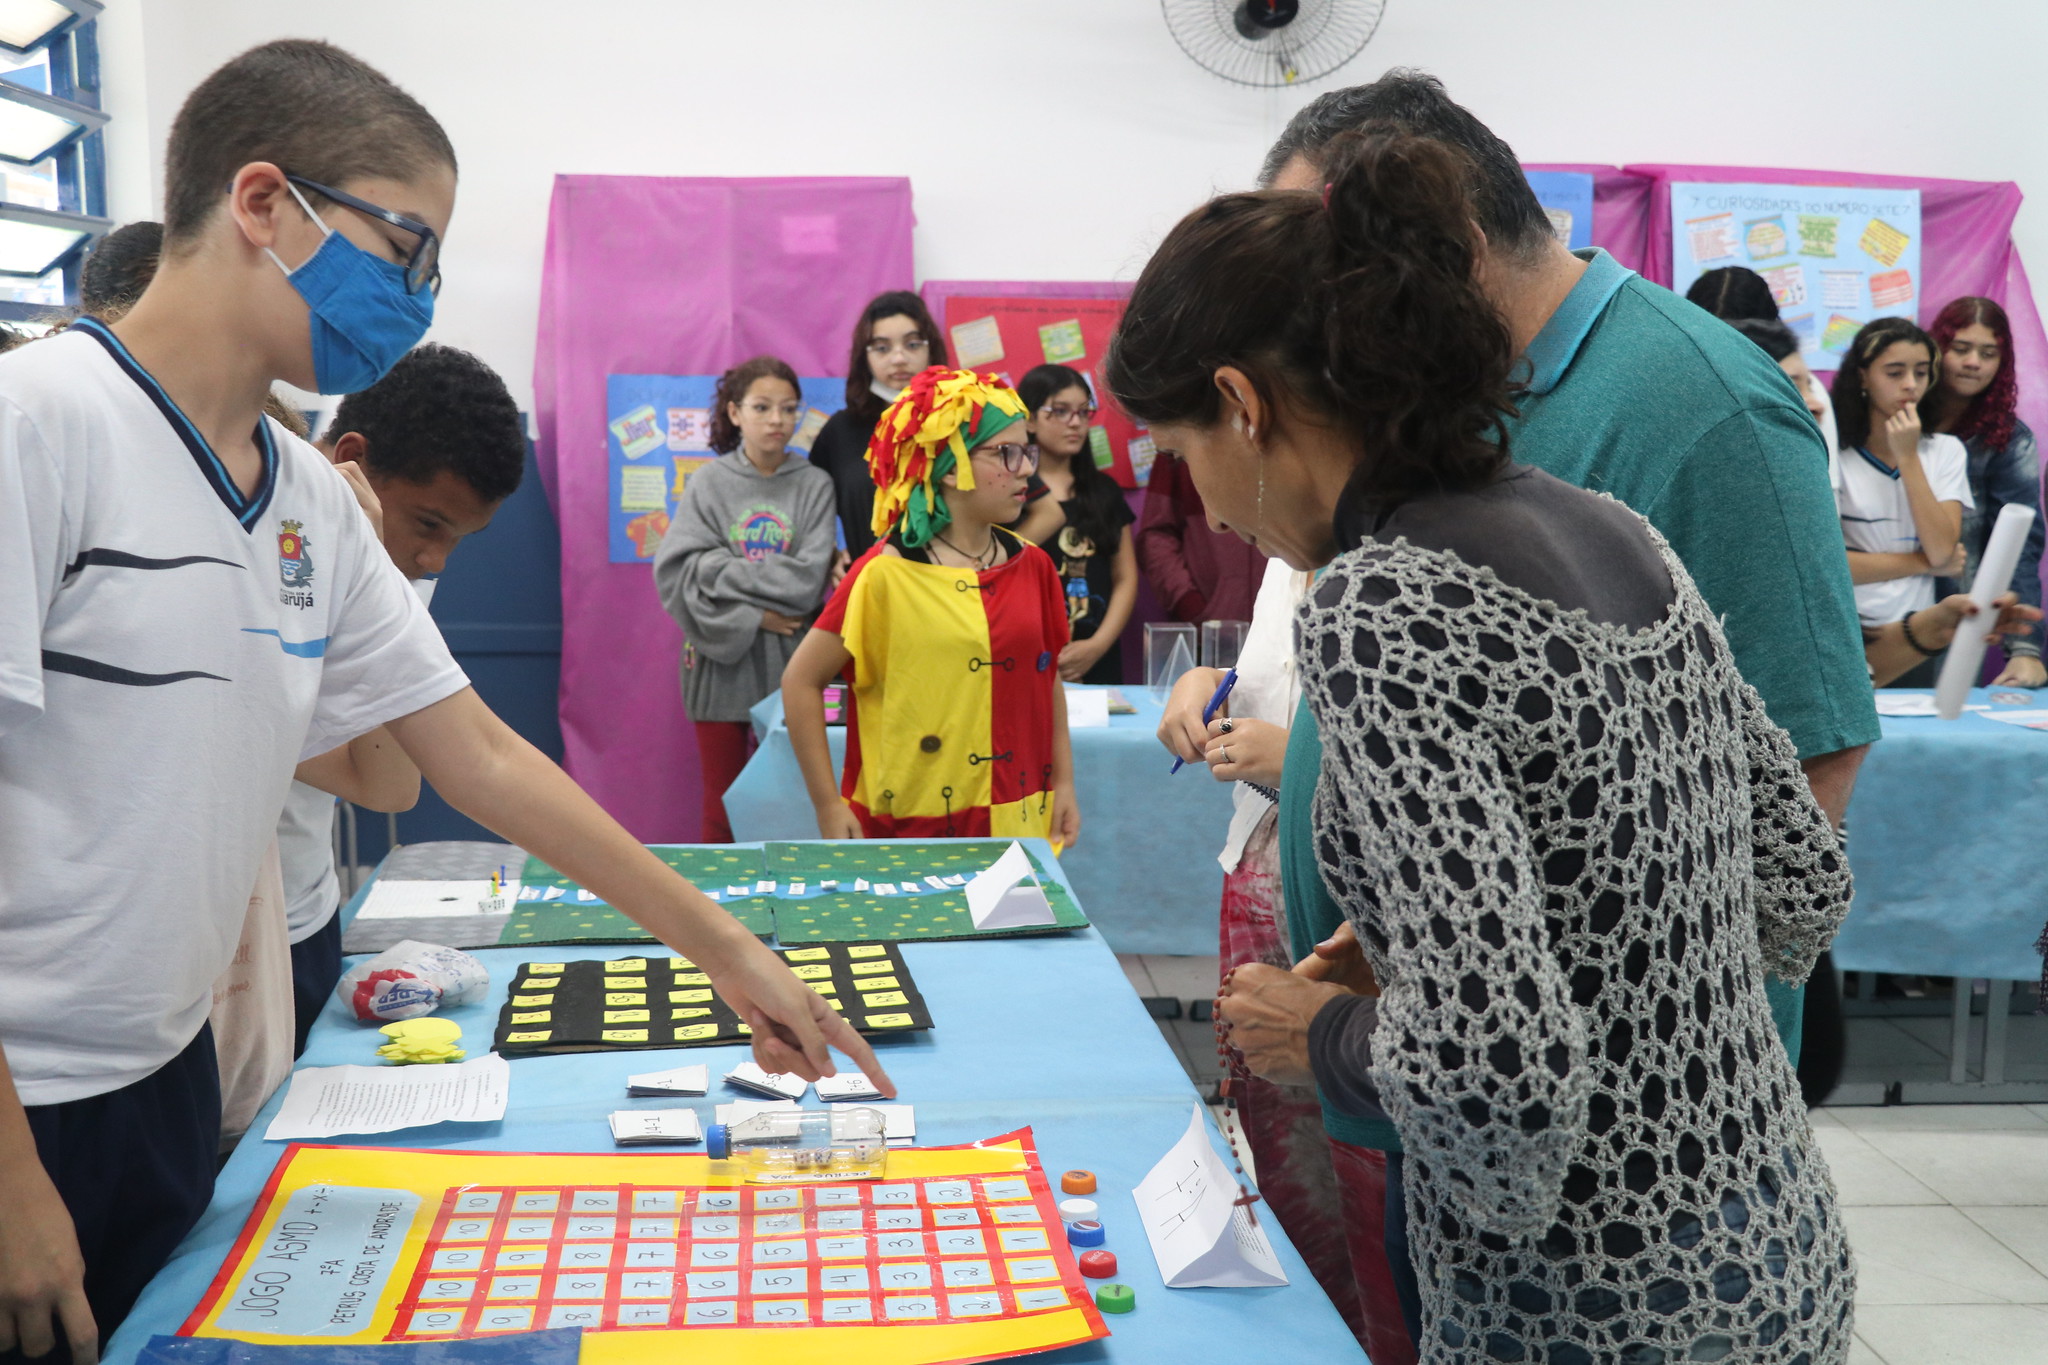 Feira apresenta jogos matemáticos desenvolvidos por alunos do